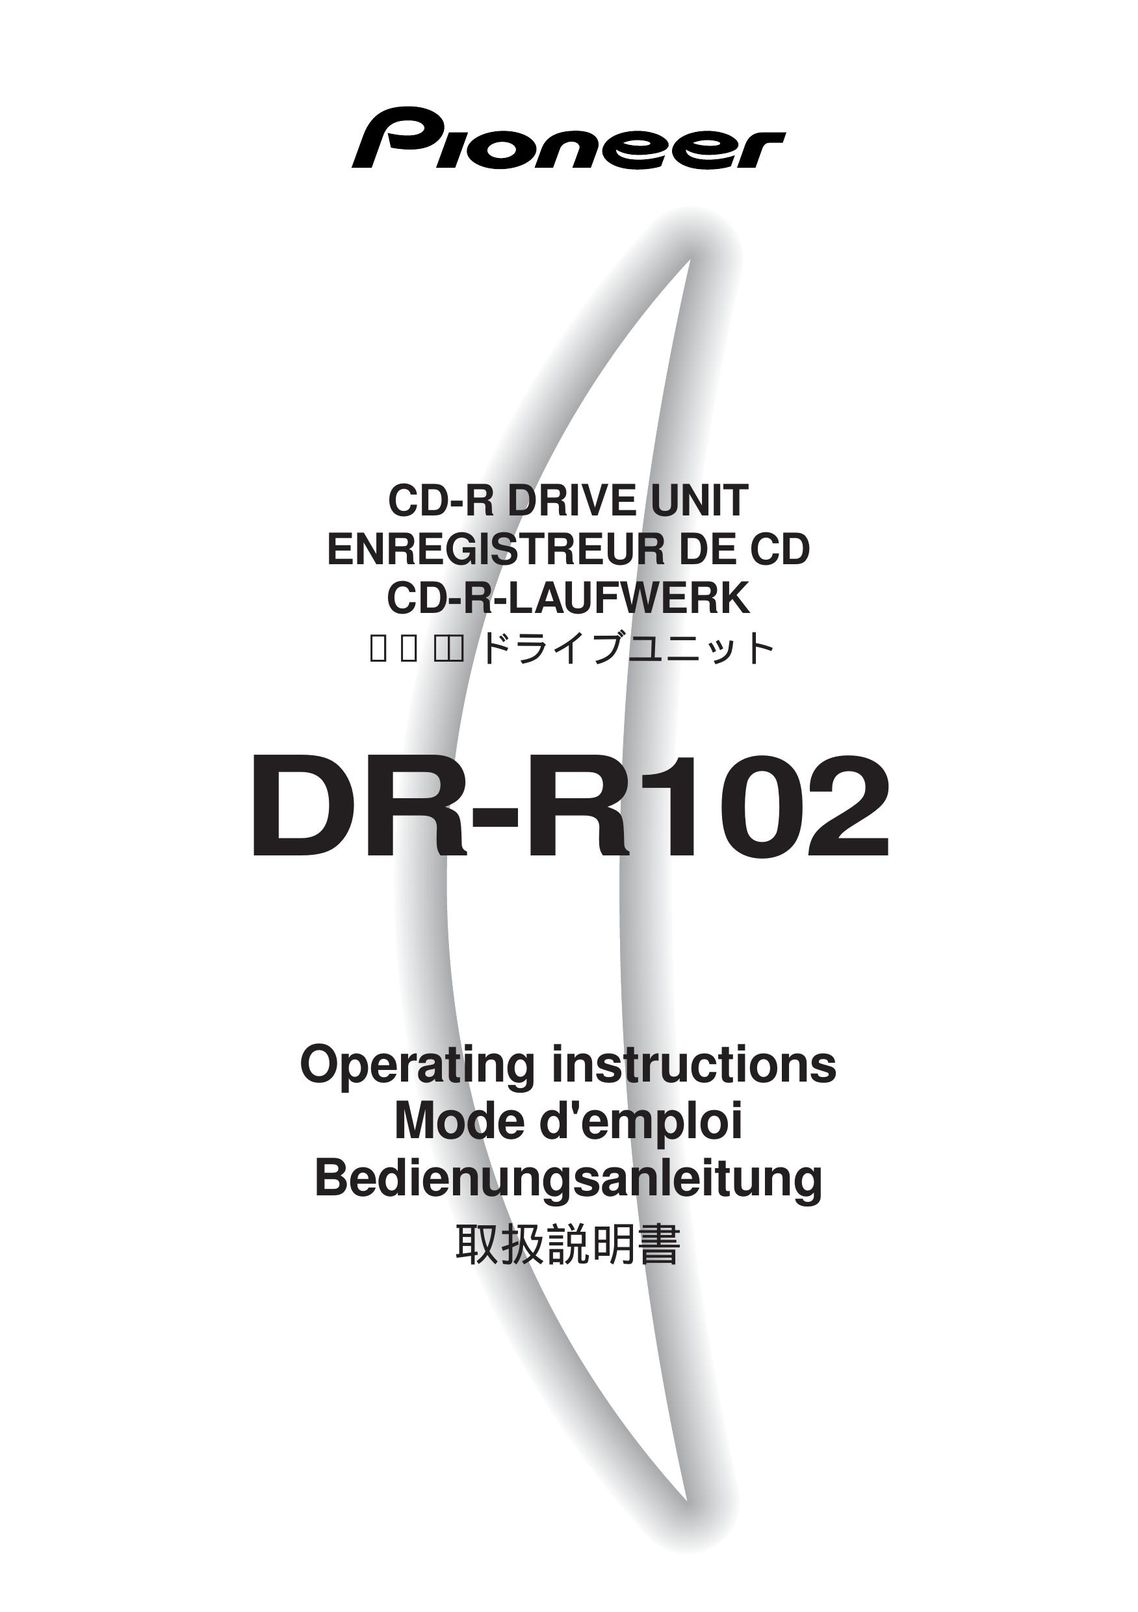 Pioneer DR-R102 Computer Drive User Manual